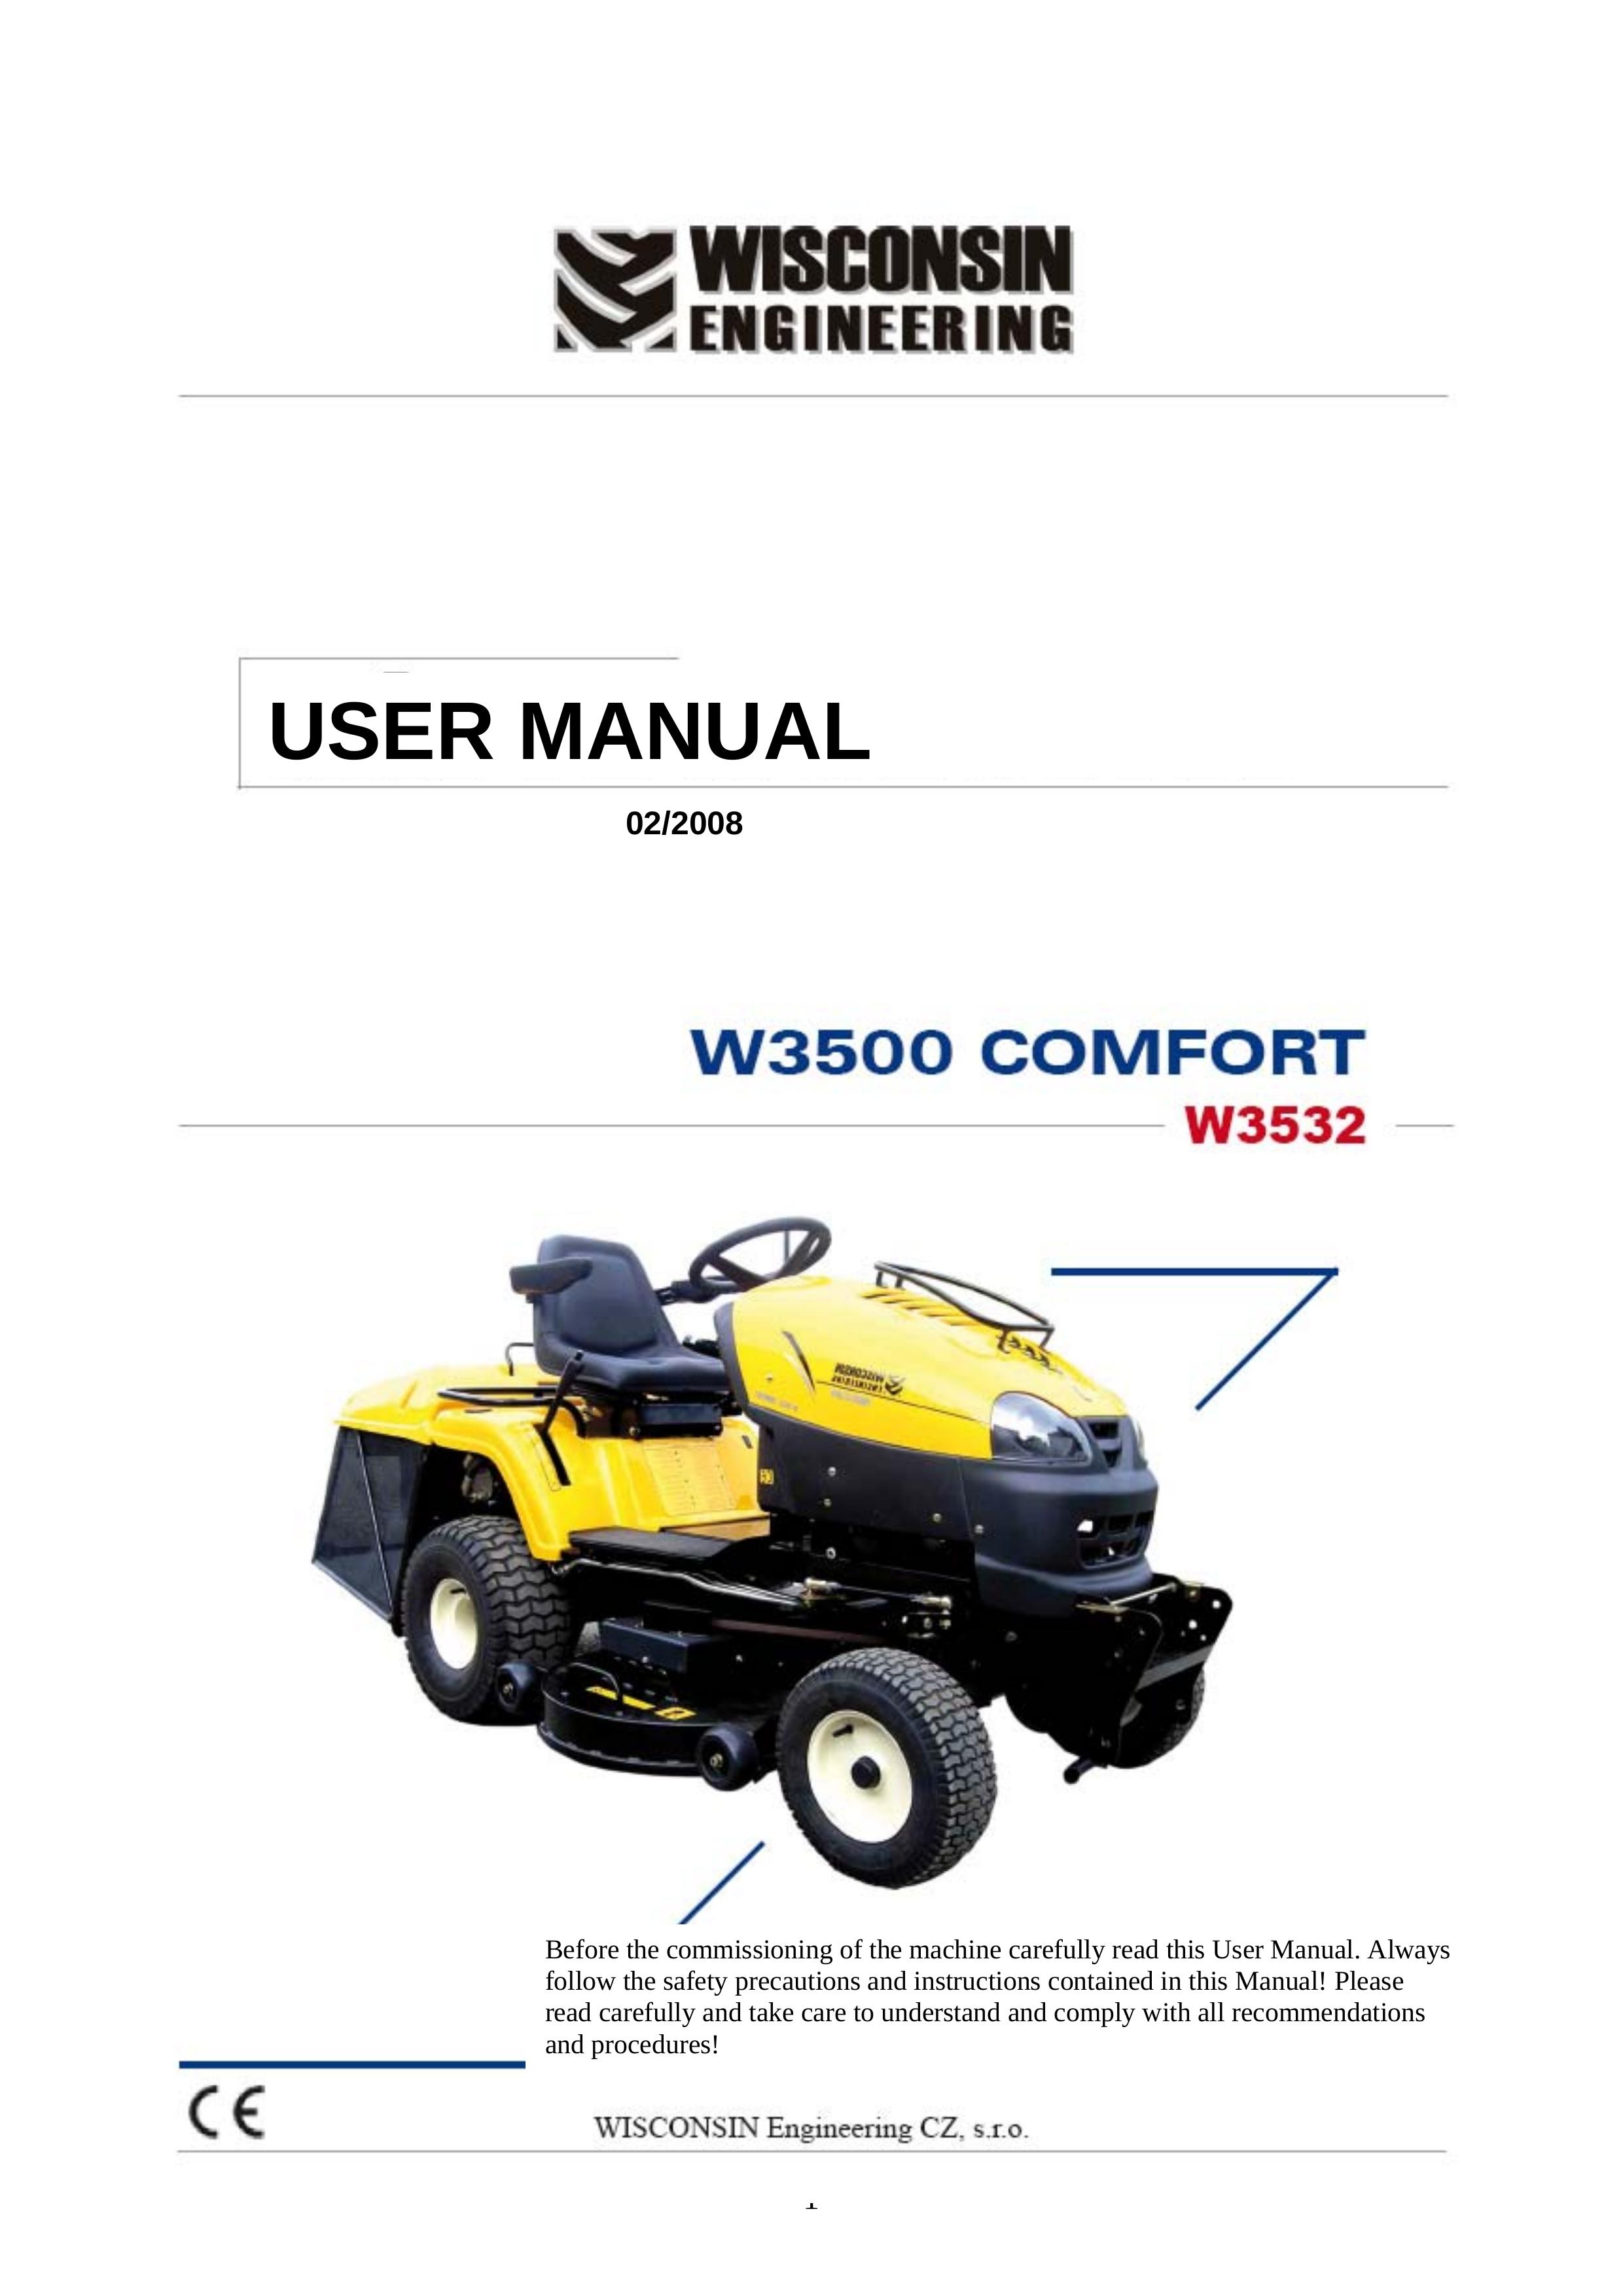 Wisconsin Aluminum Foundry W3532 Lawn Mower User Manual